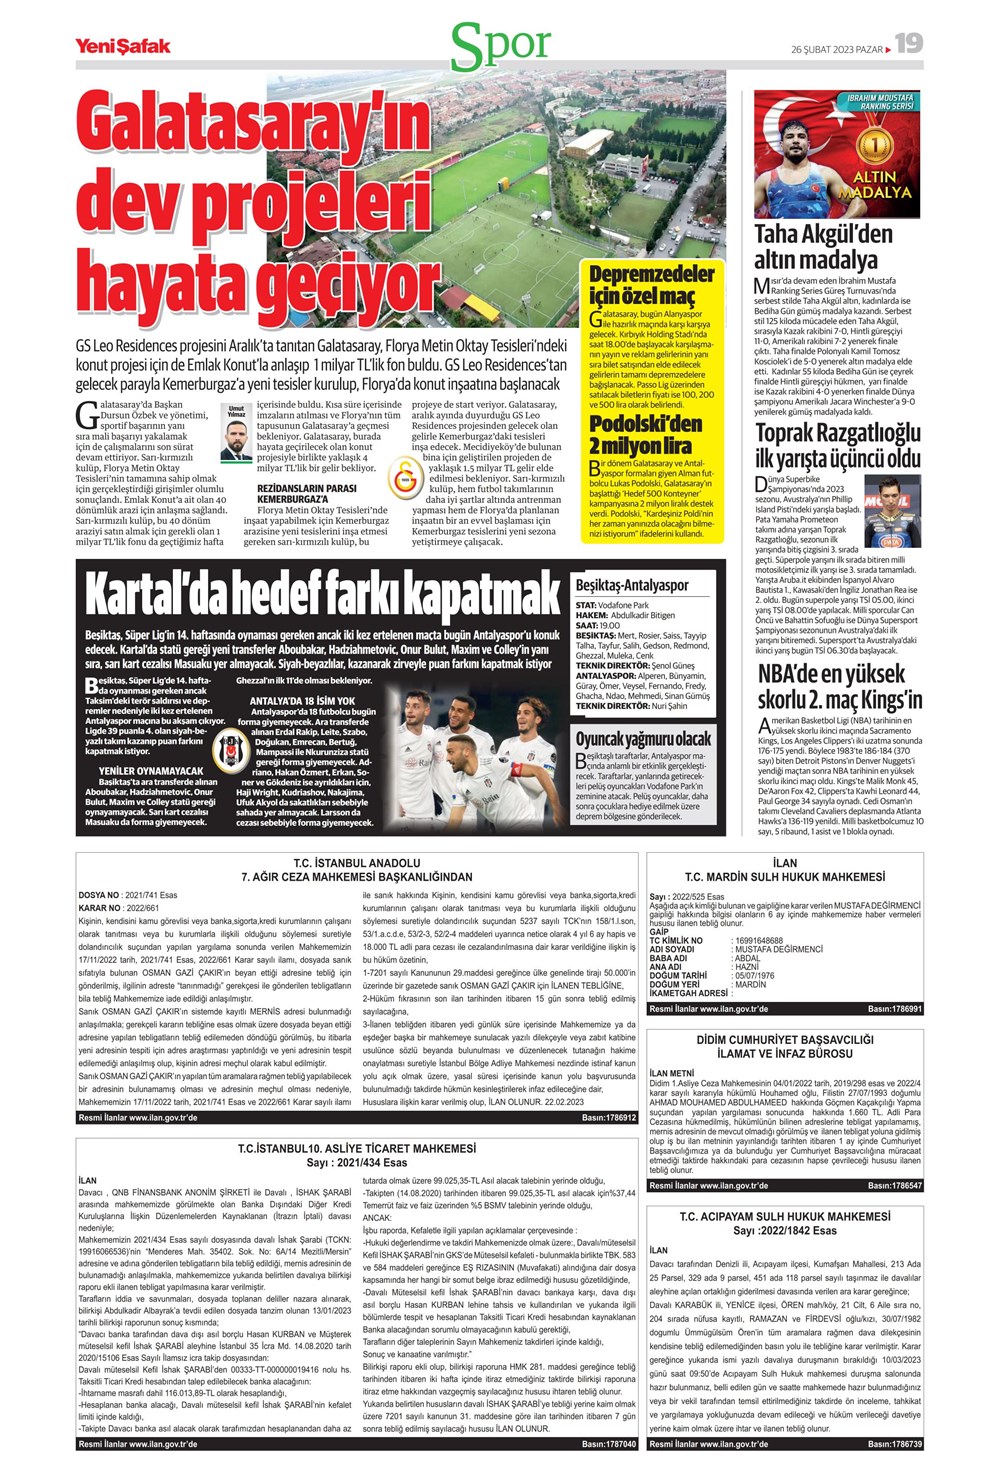 "Valenci'ağa' böyle istedi" - Sporun manşetleri  - 37. Foto